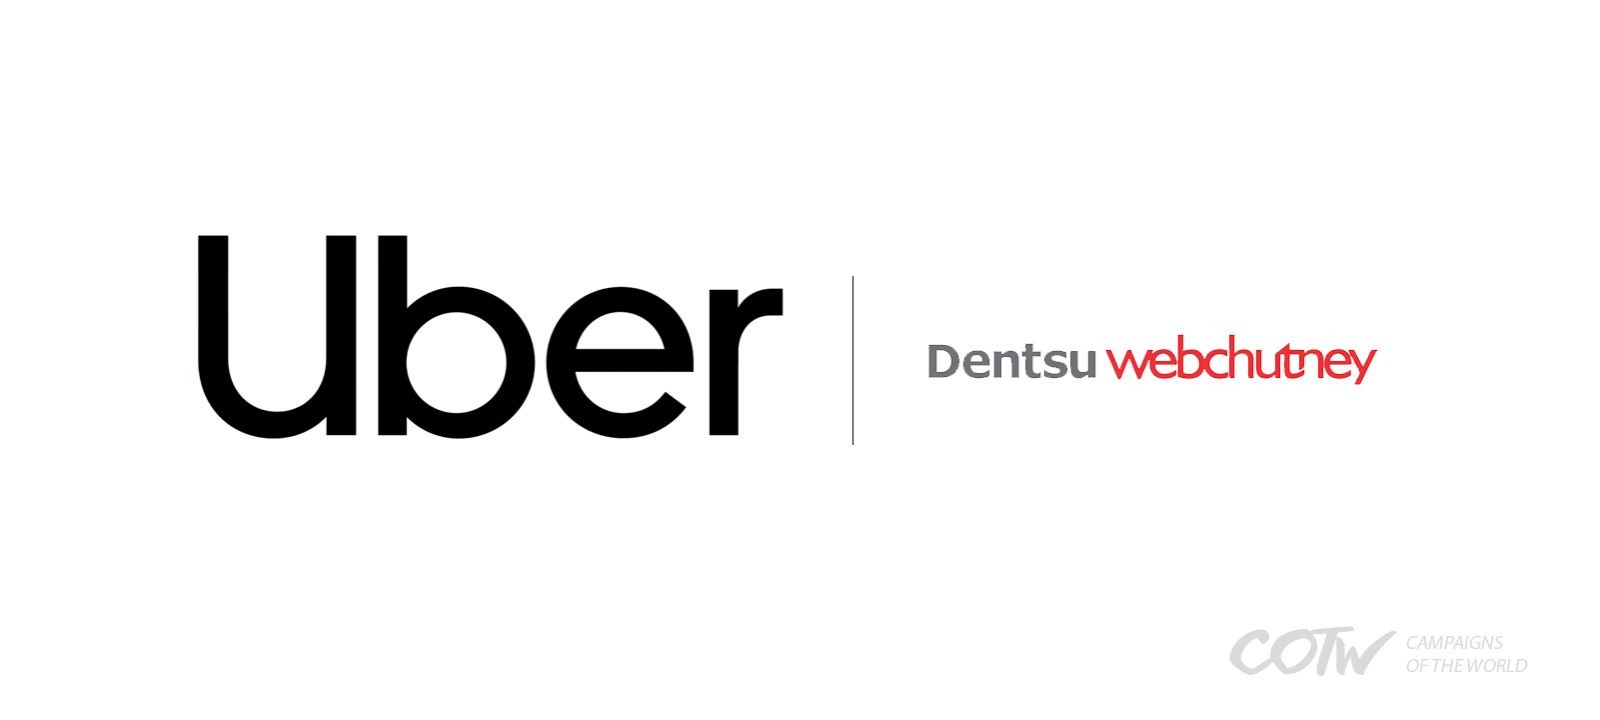 Dentsu Webchutney has won the digital mandate for Uber